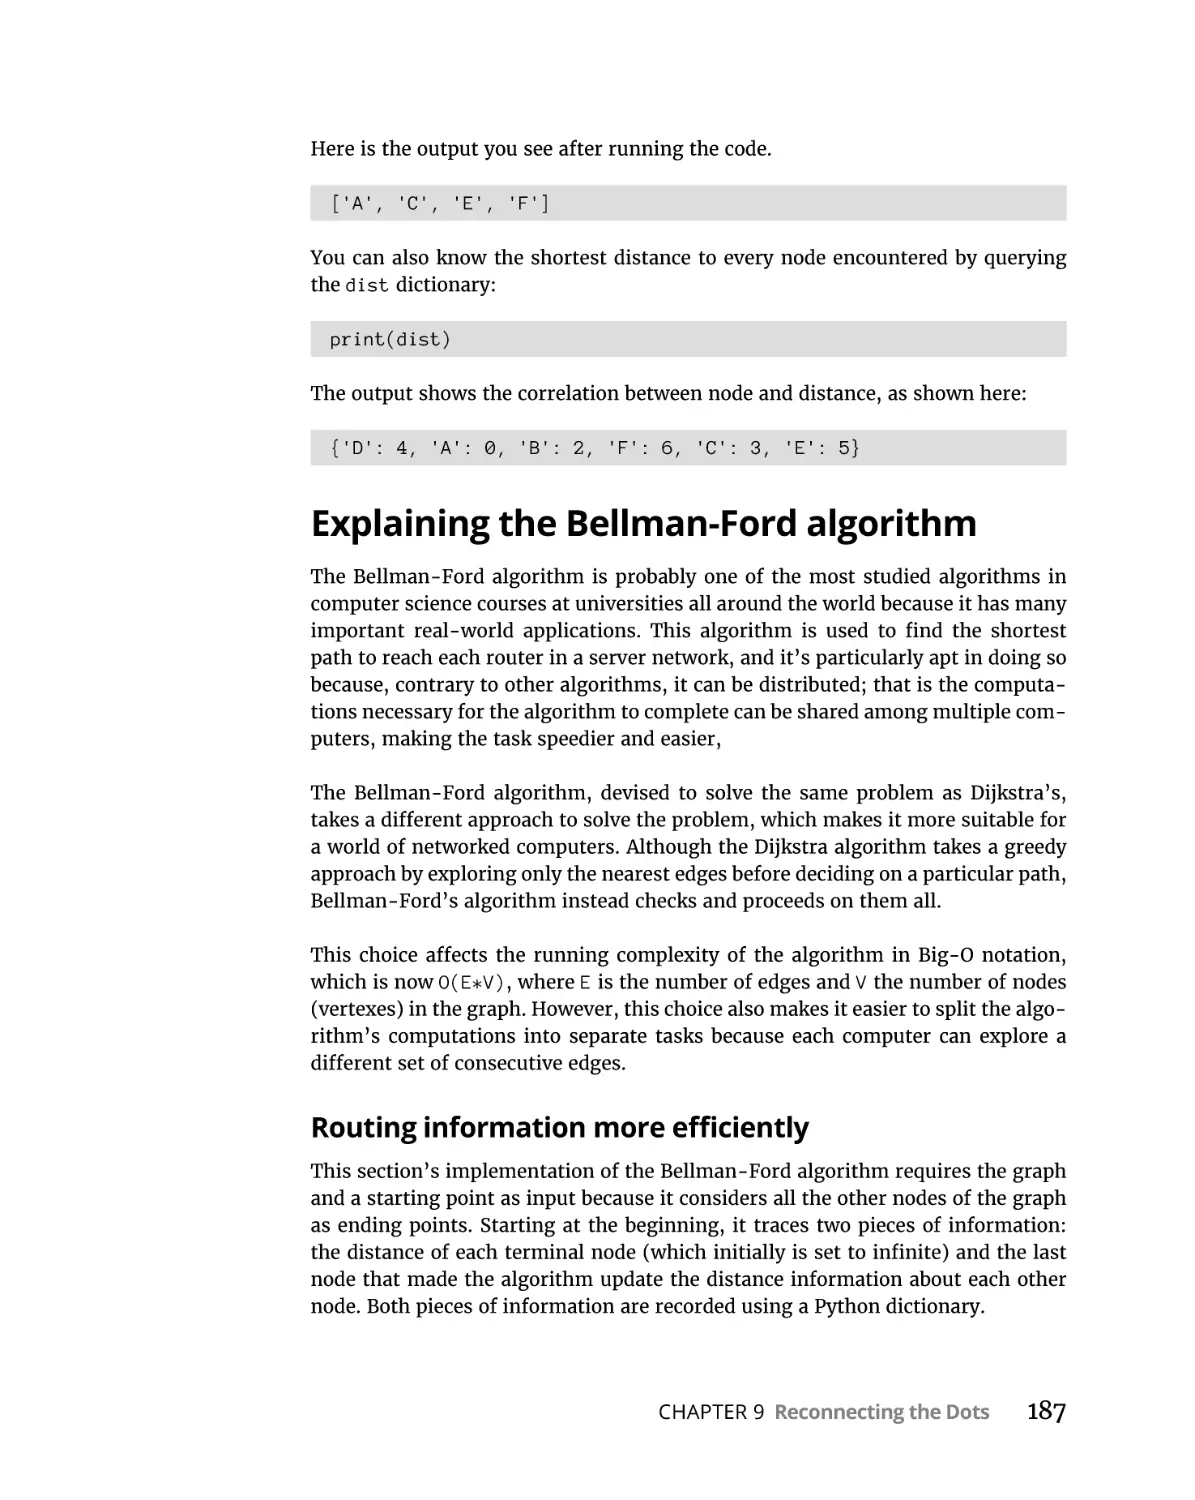 Explaining the Bellman-Ford algorithm